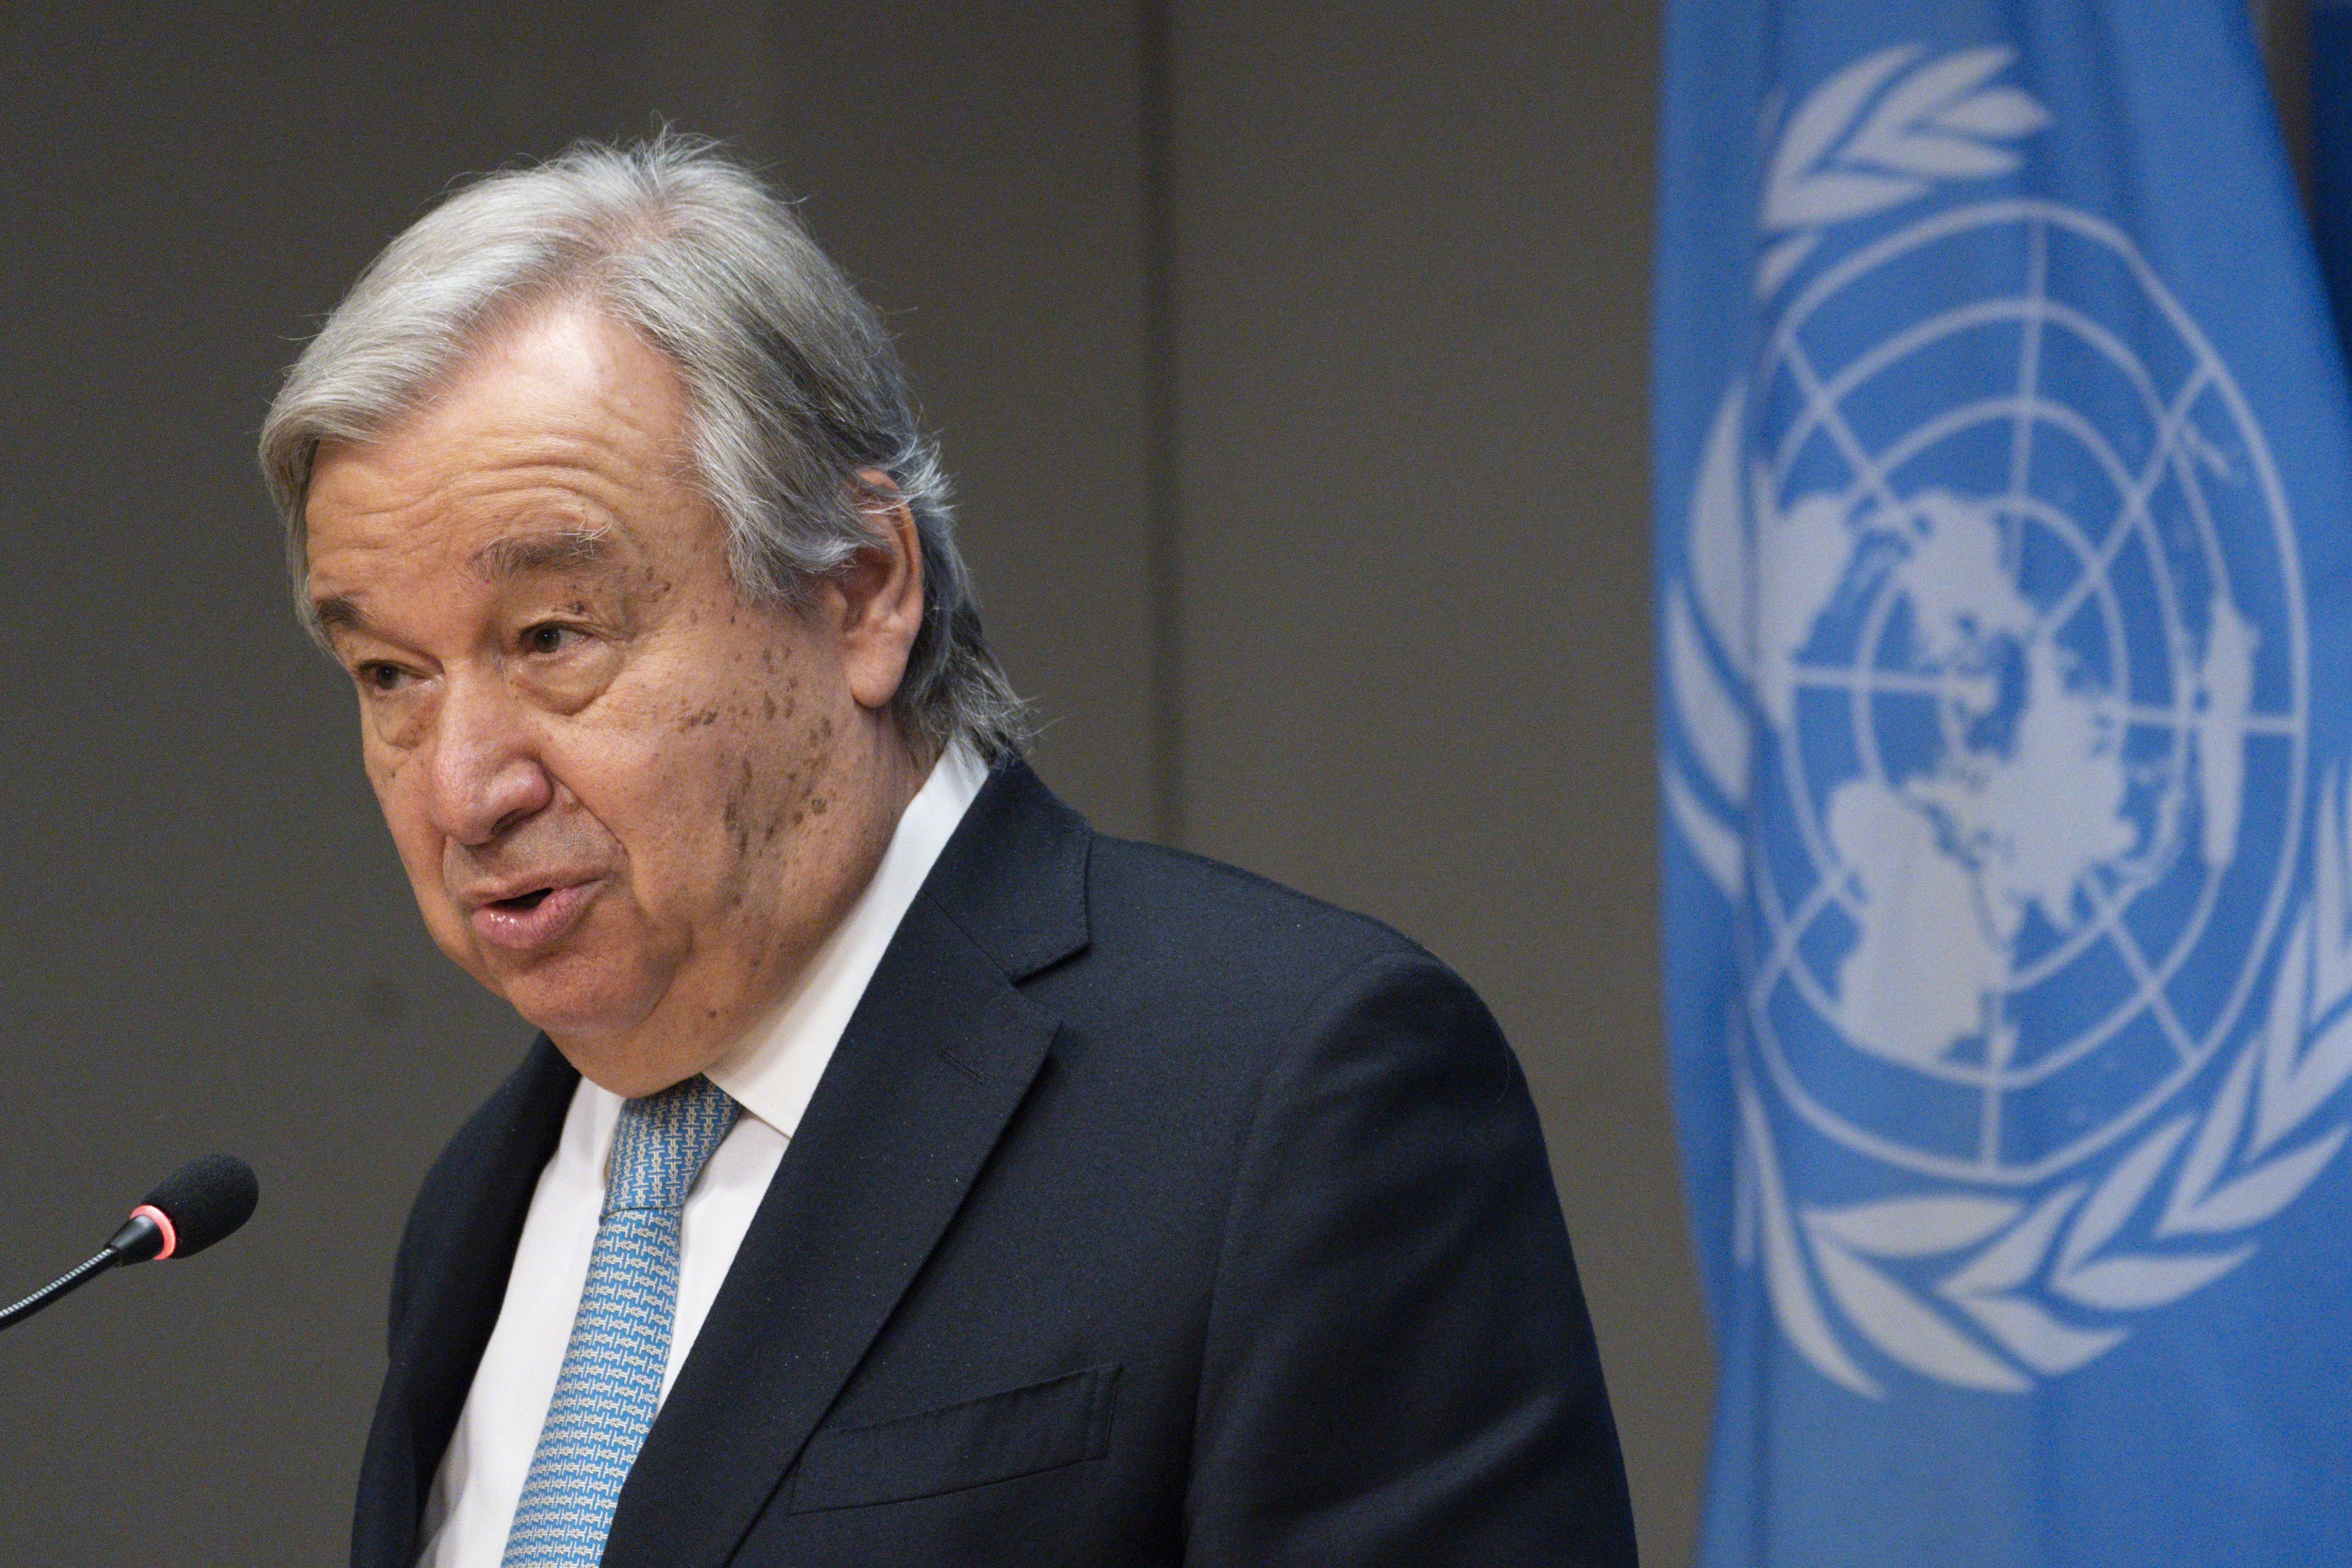 Perempuan ‘penting’ untuk pembicaraan damai dalam konflik global: Ketua PBB